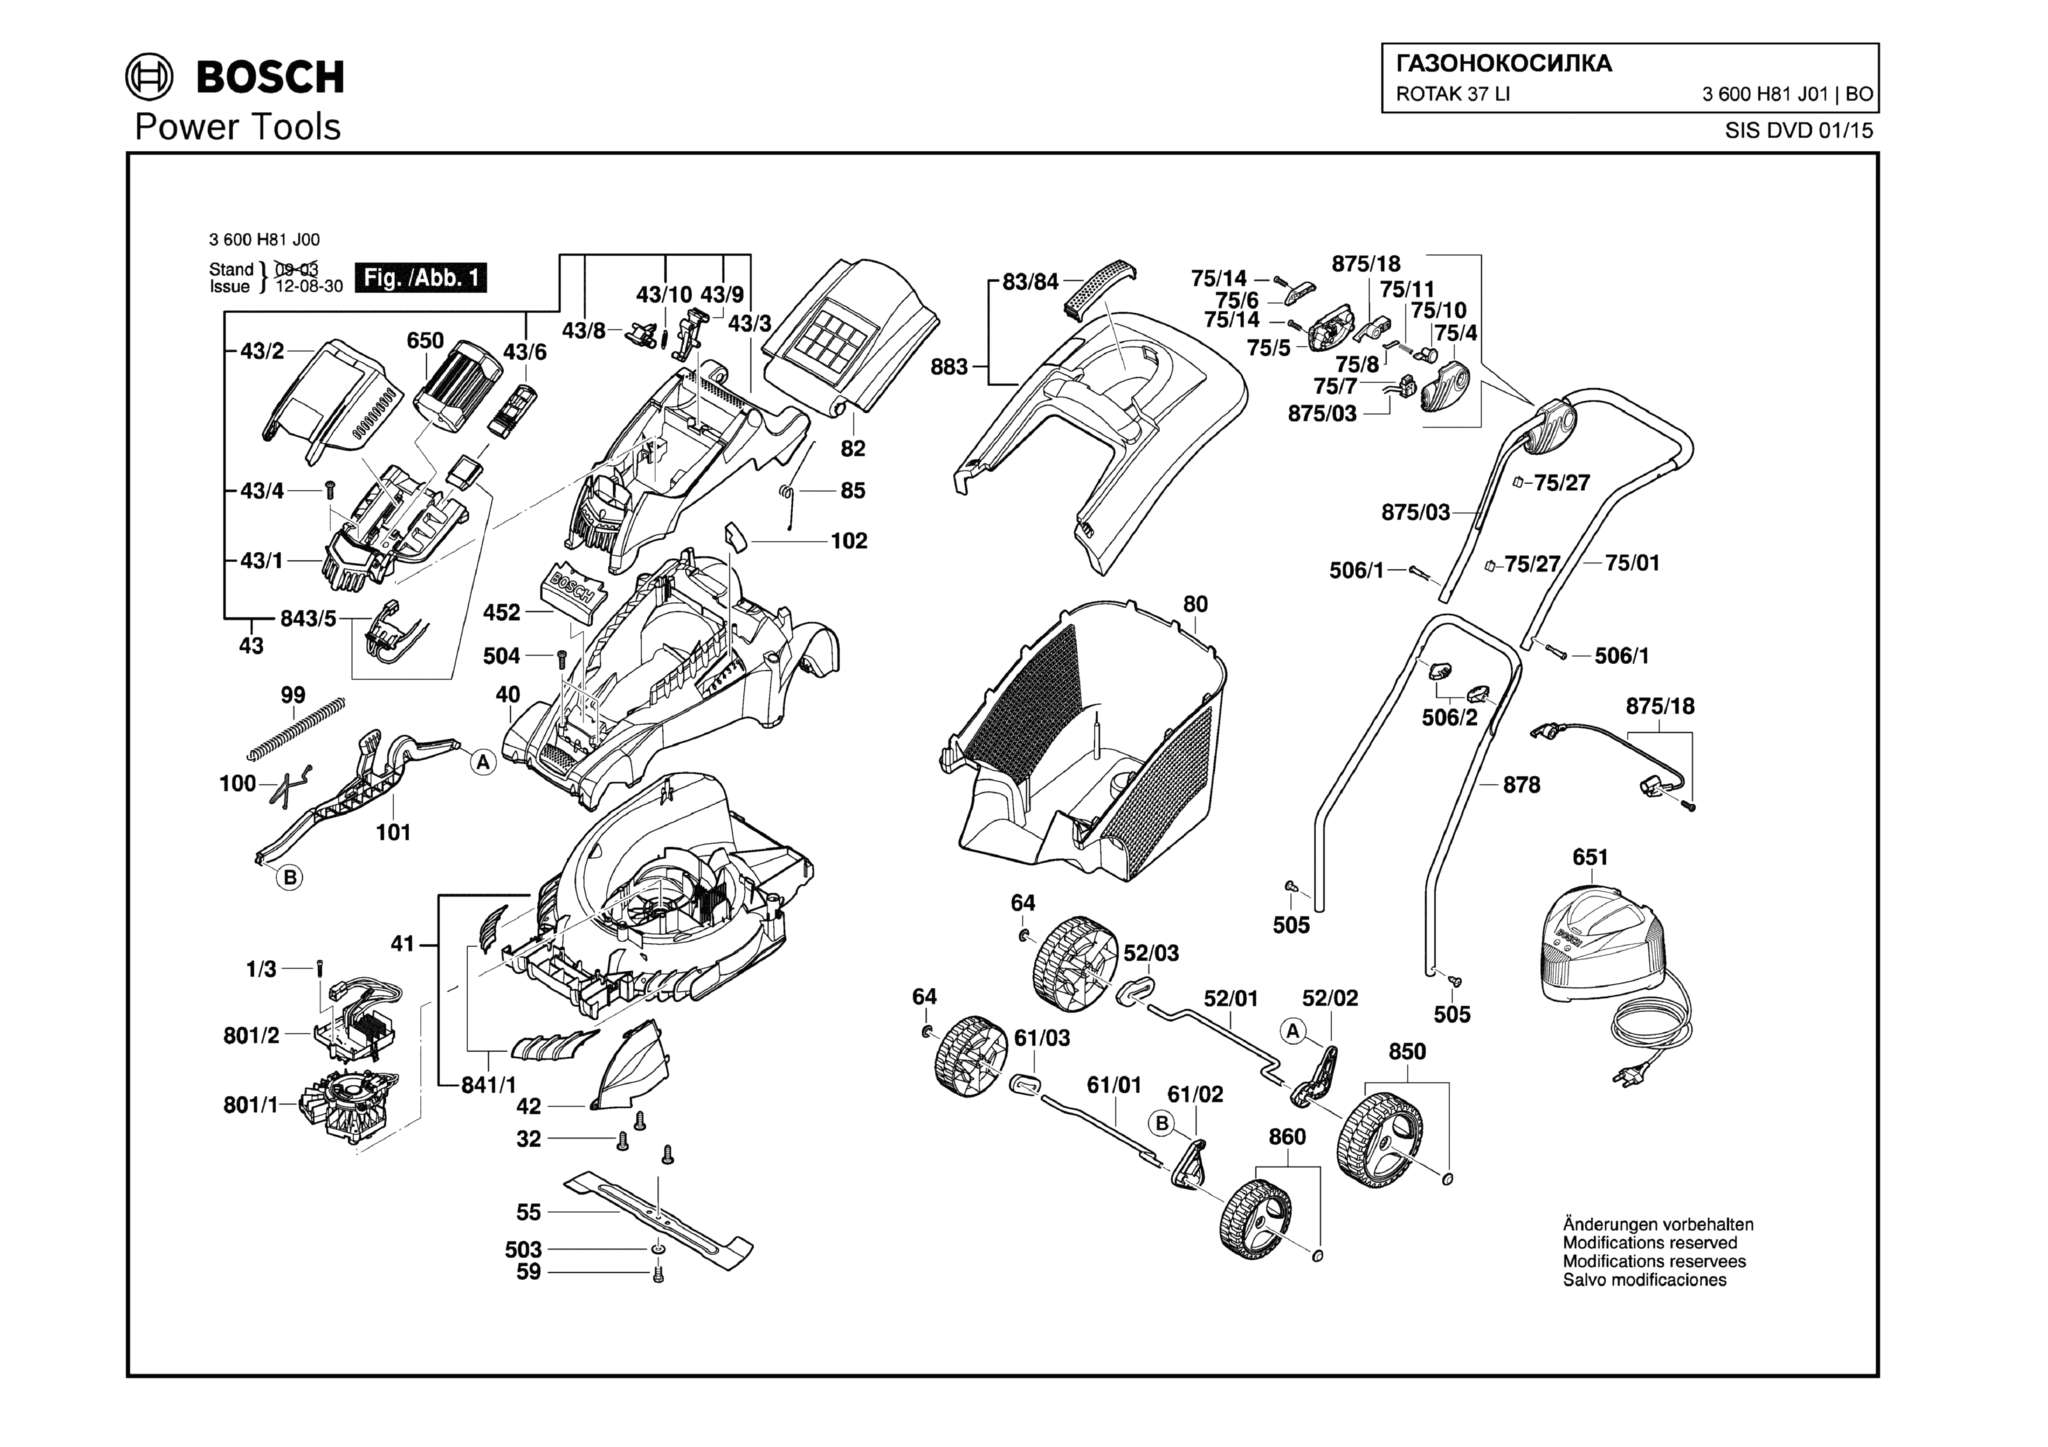 Запчасти, схема и деталировка Bosch ROTAK 37 LI (ТИП 3600H81J01)